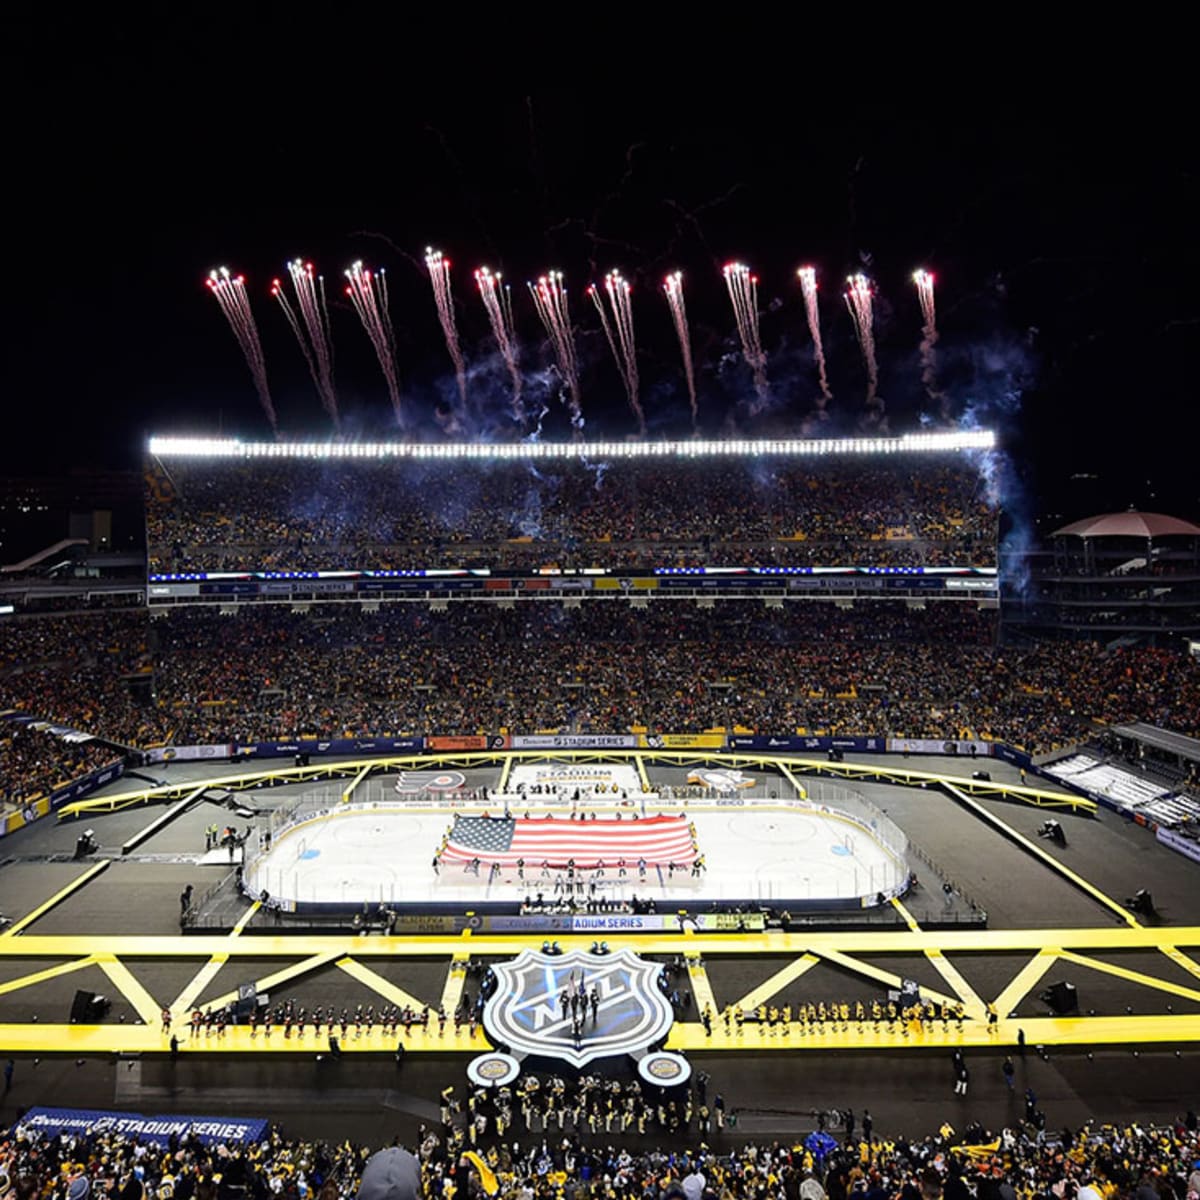 2014 Pittsburgh Penguins Stadium Series Second Period Game Worn